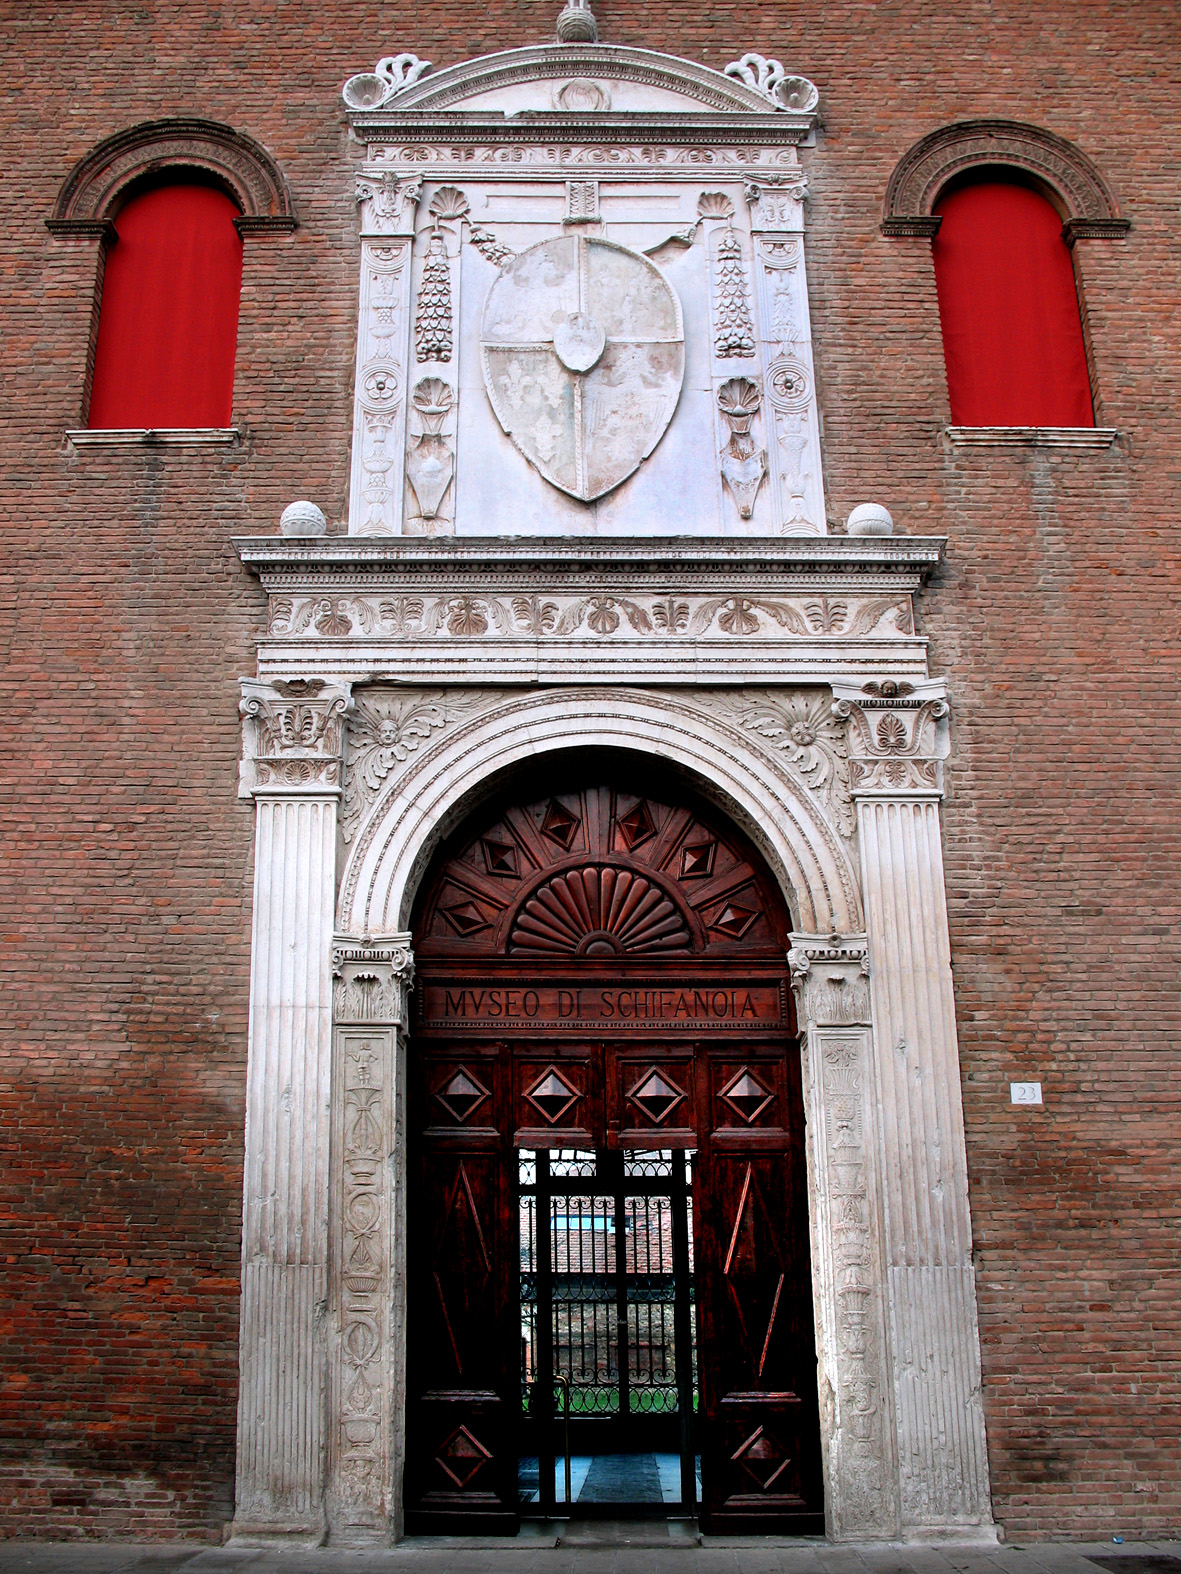 foto: https://upload.wikimedia.org/wikipedia/commons/0/03/Palazzo_Schifanoia4.jpg